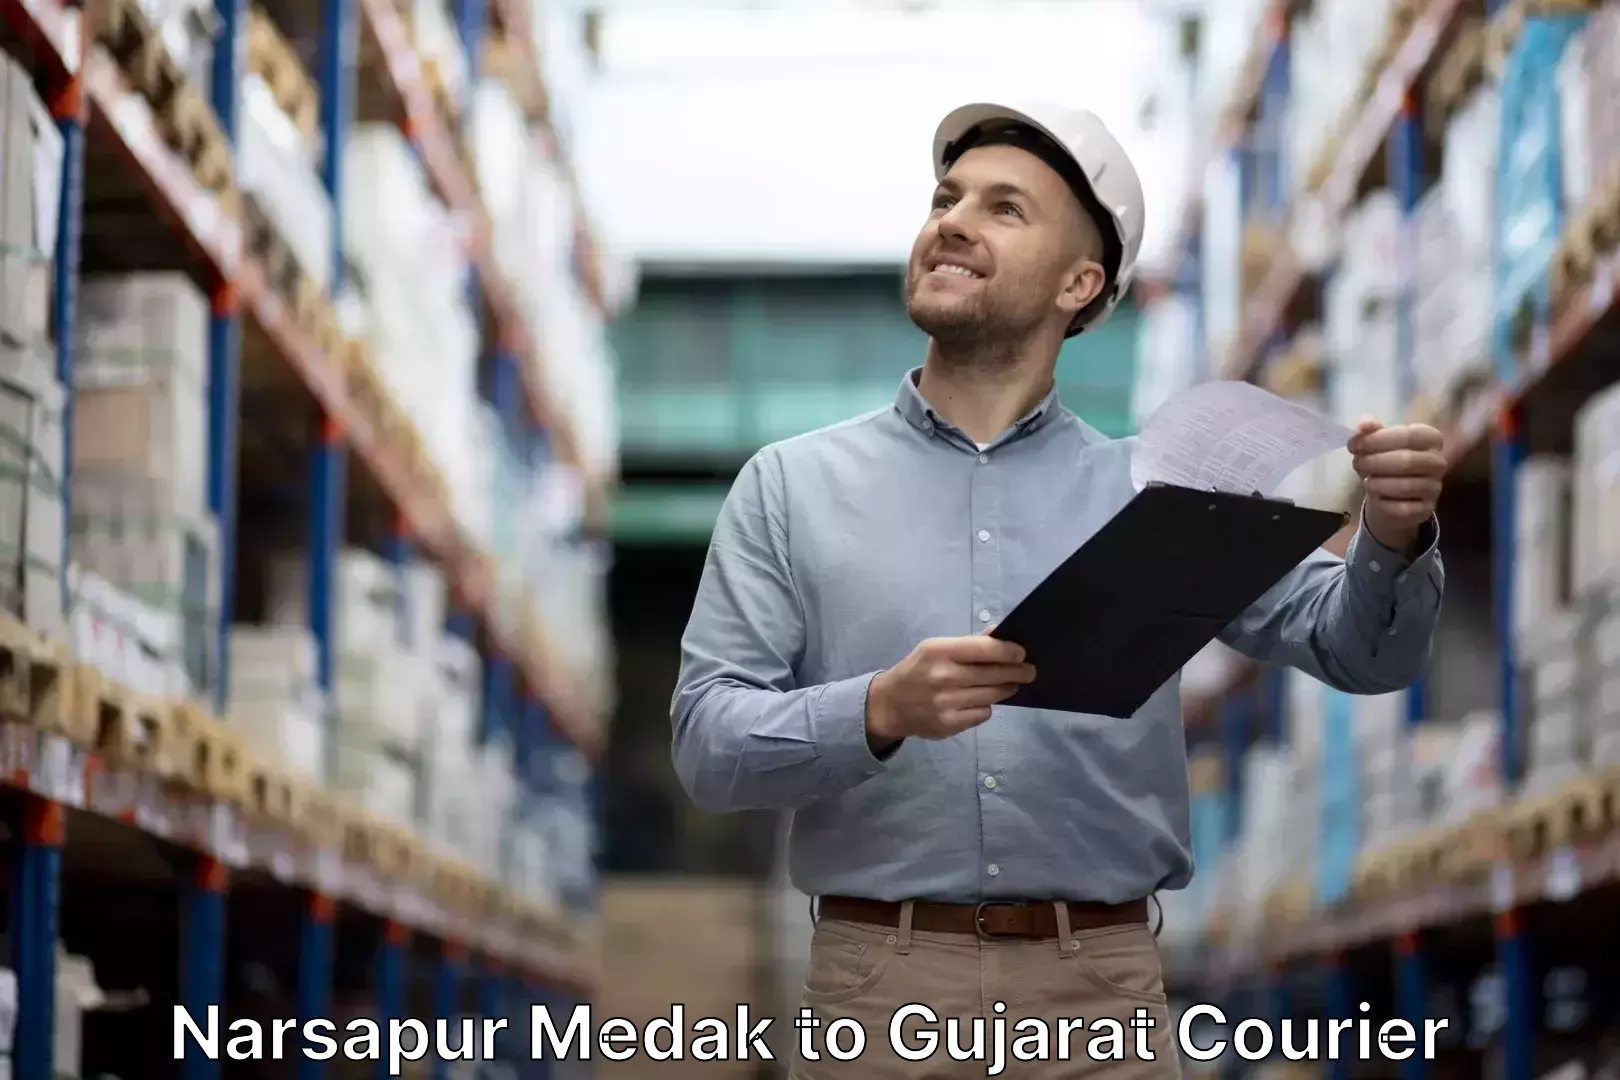 Luggage transfer service Narsapur Medak to Gujarat